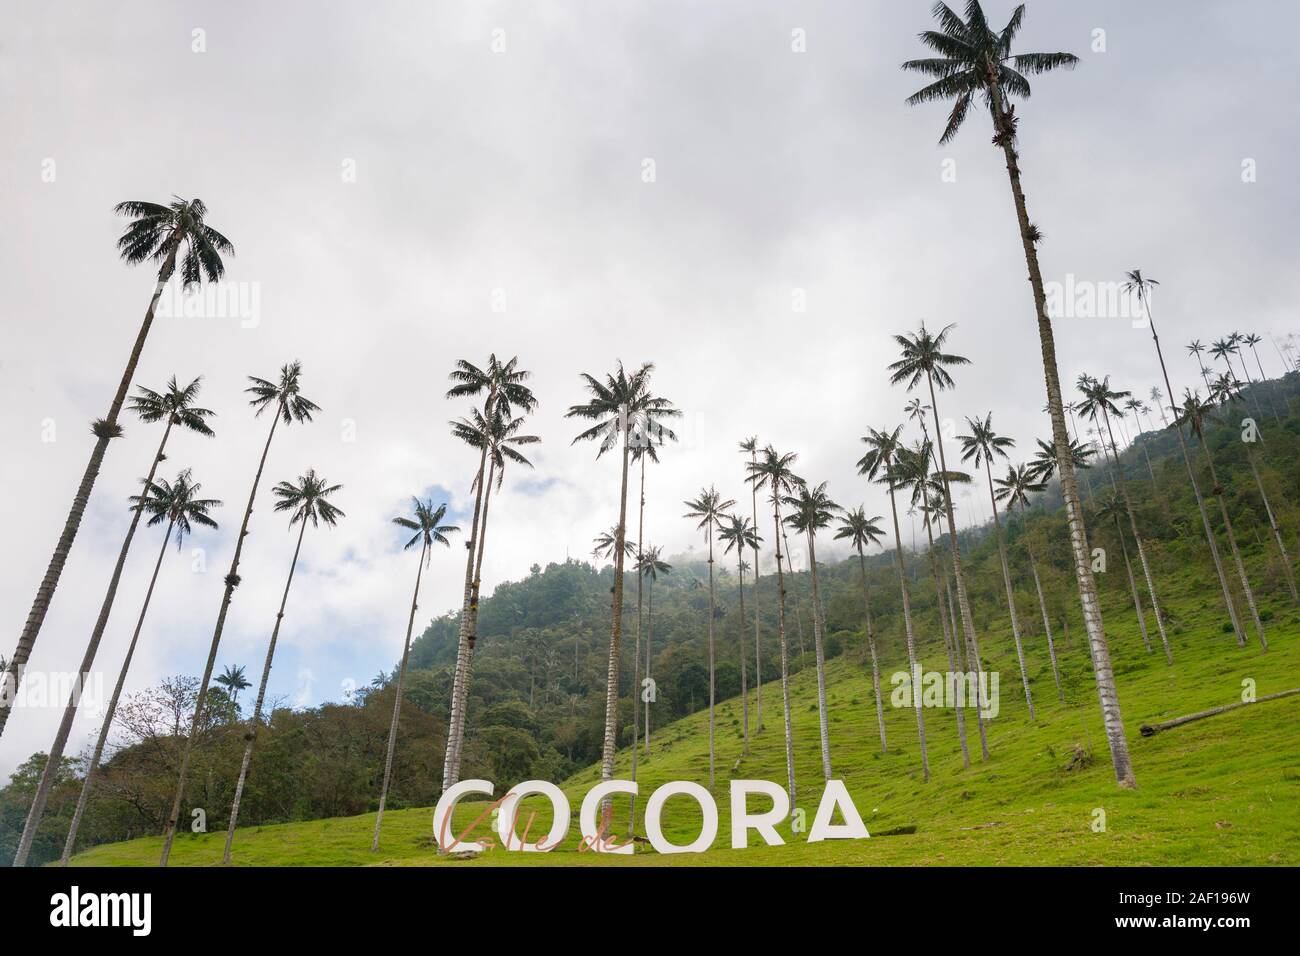 Valle de Cocora (cocora Tal) in der Nähe von Salento in Kolumbien. Stockfoto